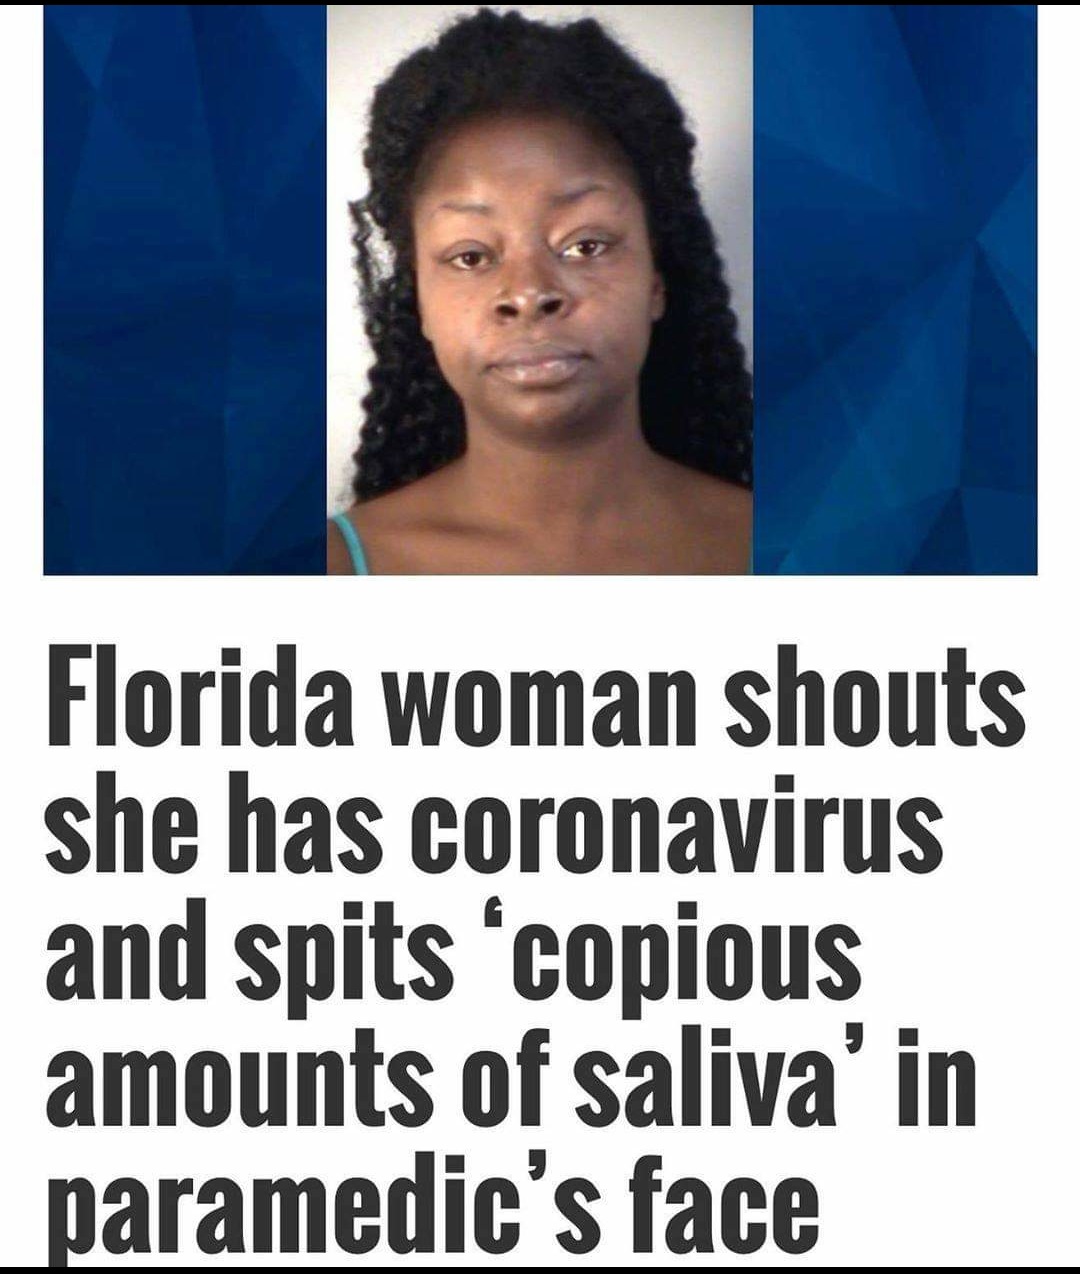 photo caption - Florida woman shouts she has coronavirus and spits 'copious amounts of saliva' in paramedic's face